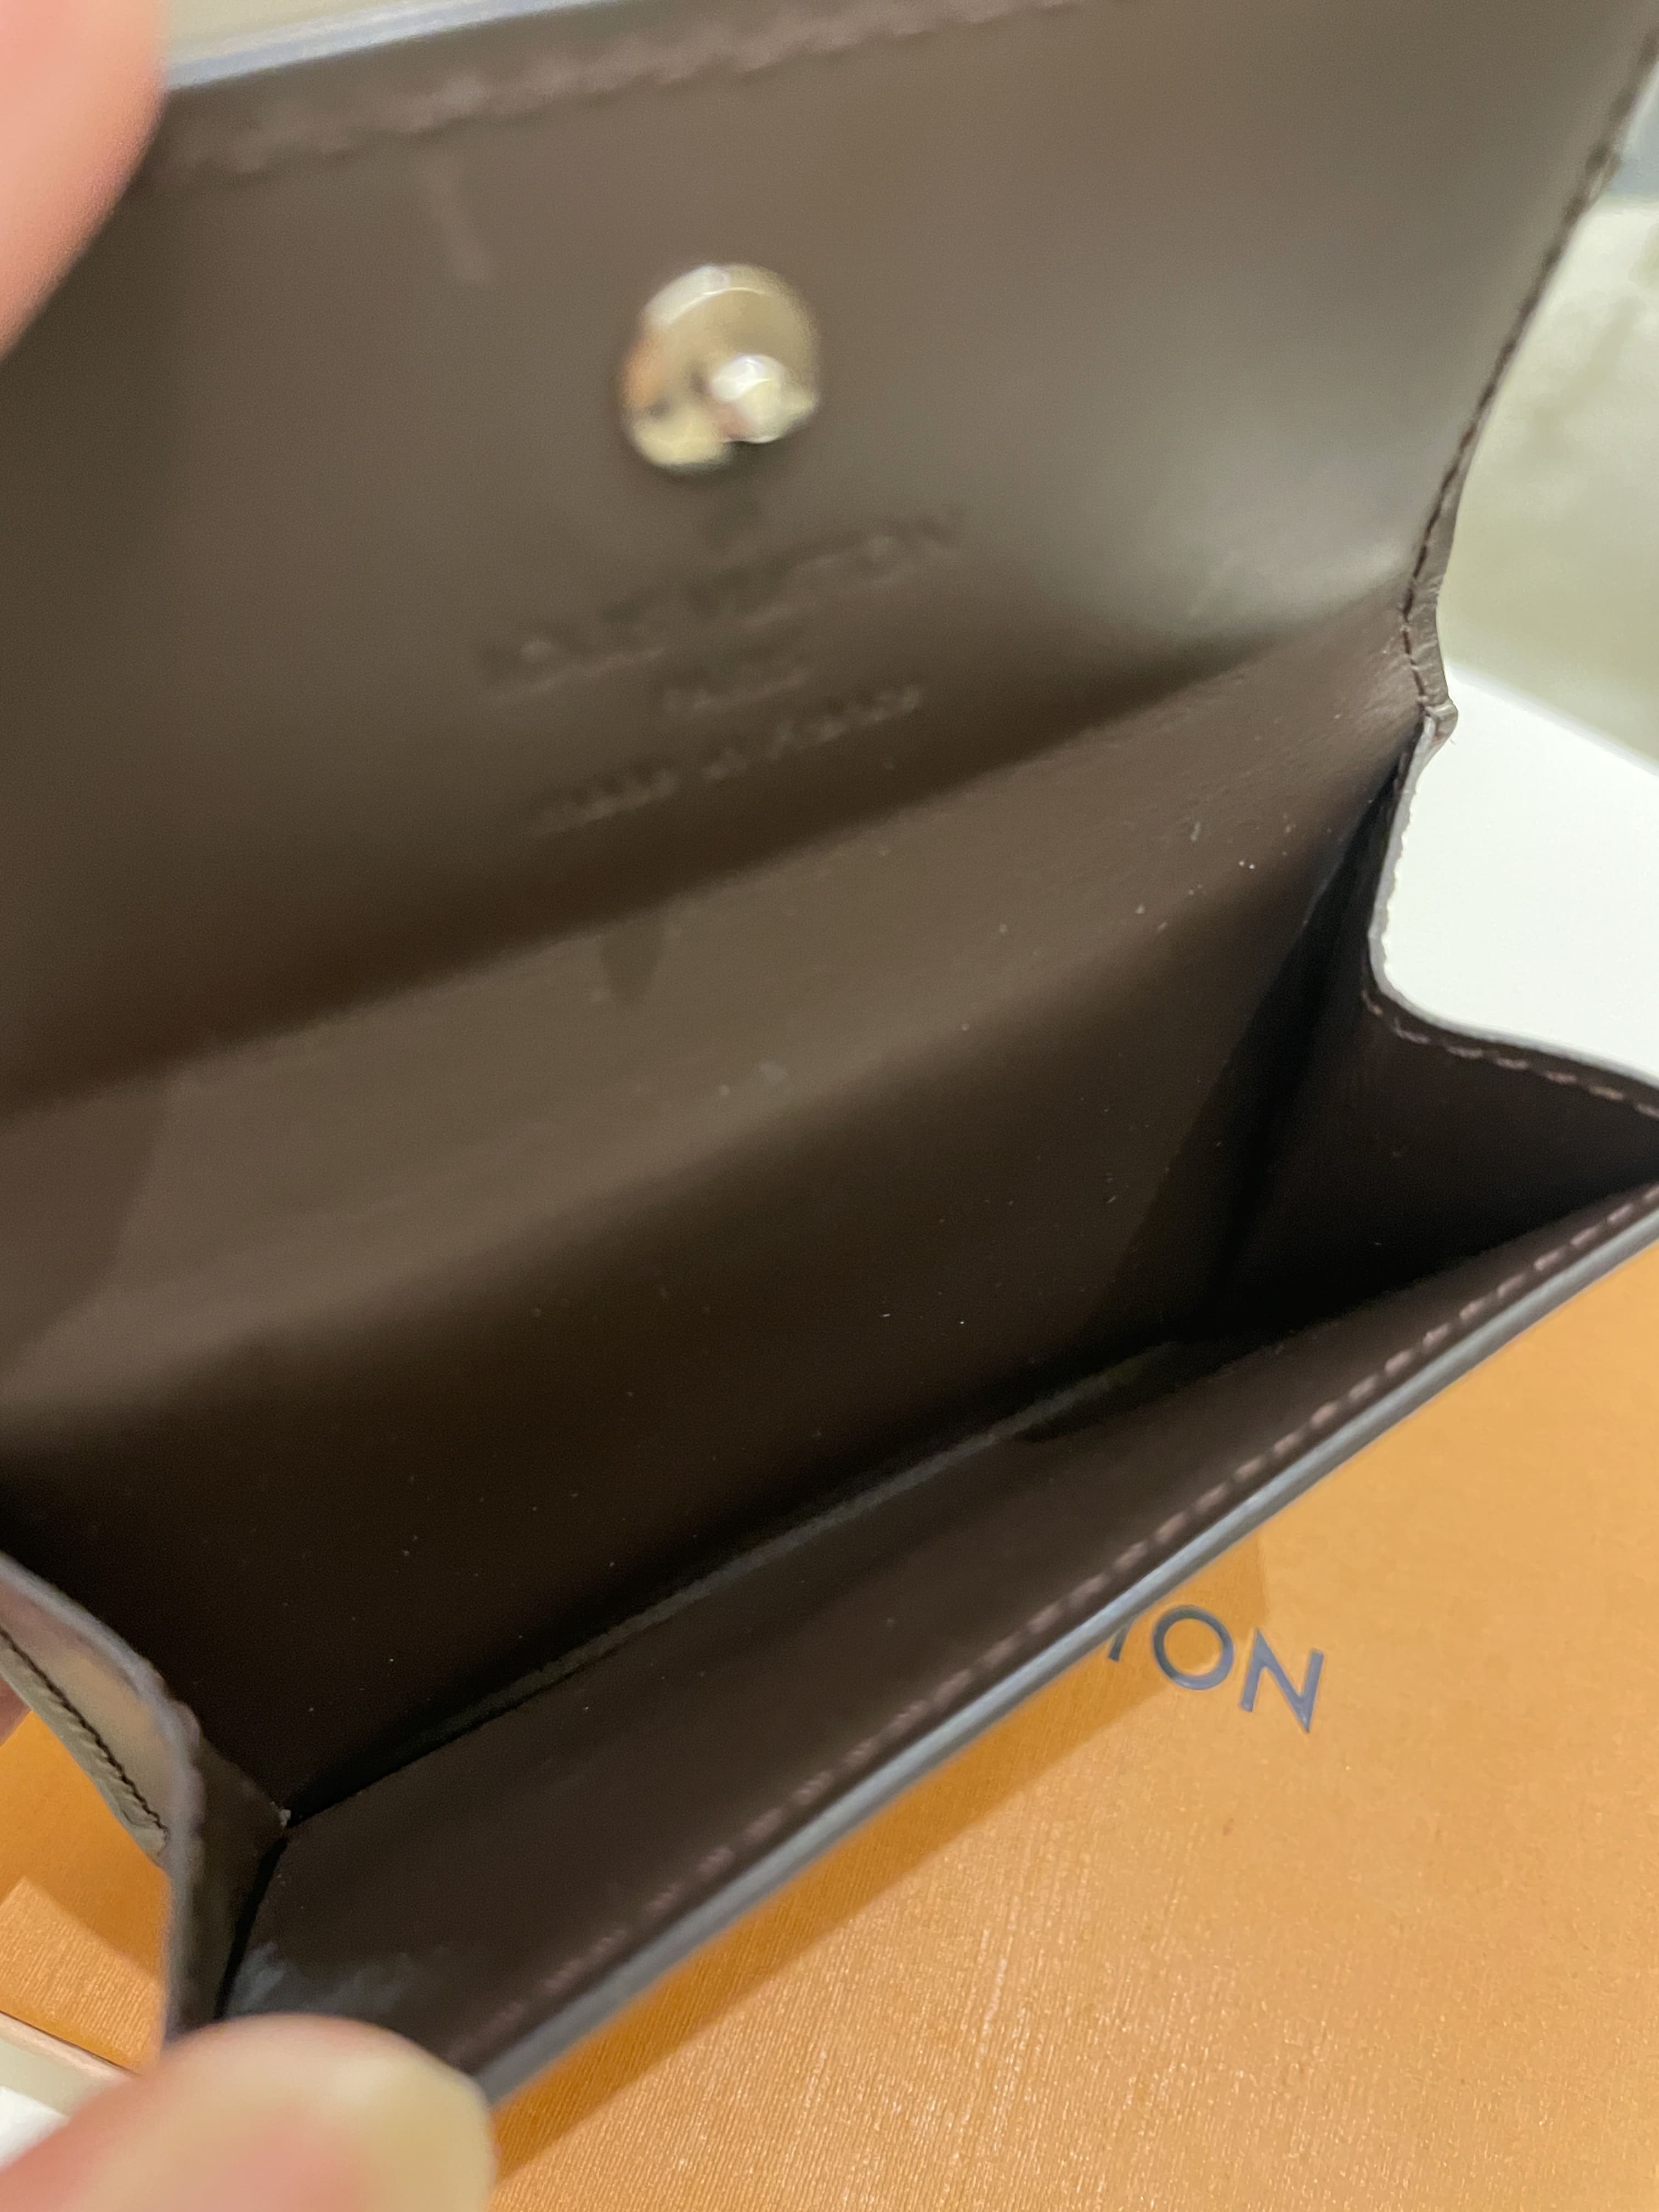 Louis Vuitton Iris Compact Wallet Review 